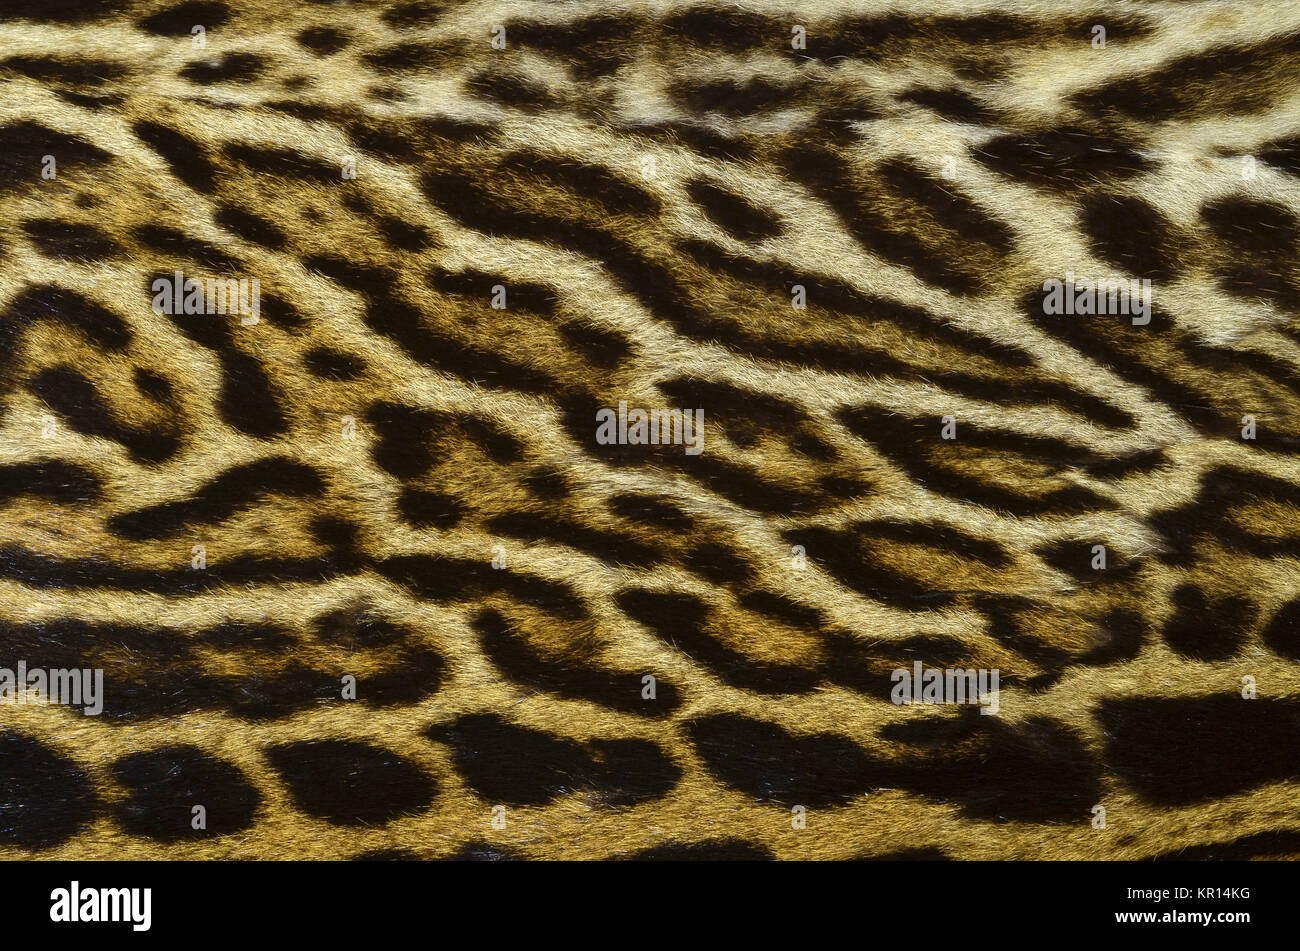 leopard texture background Stock Photo